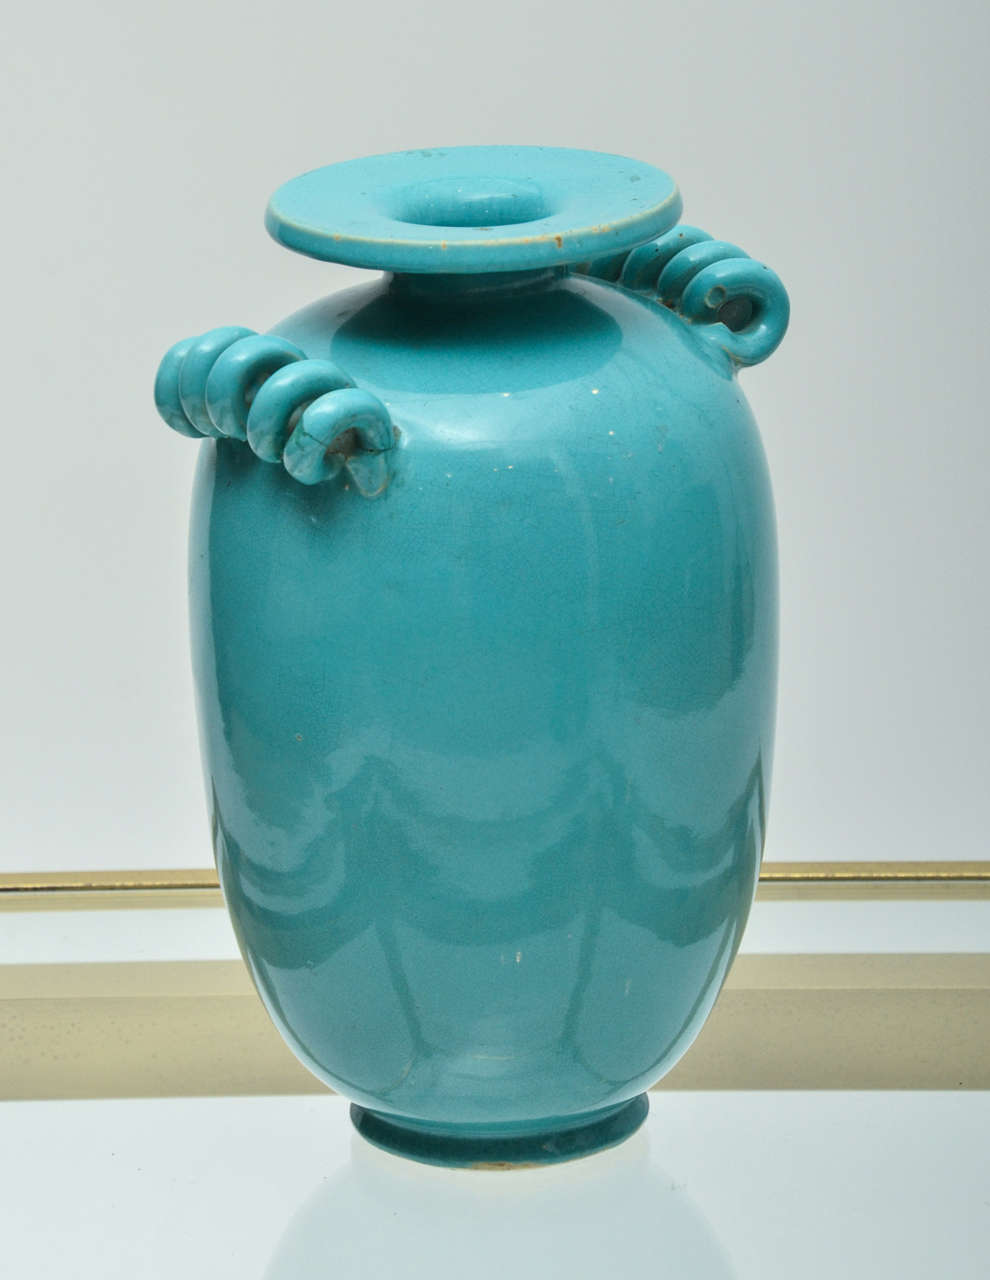 A 1920s Dutch Art Deco pottery vase by Geuren, one of the most famous Dutch potters.